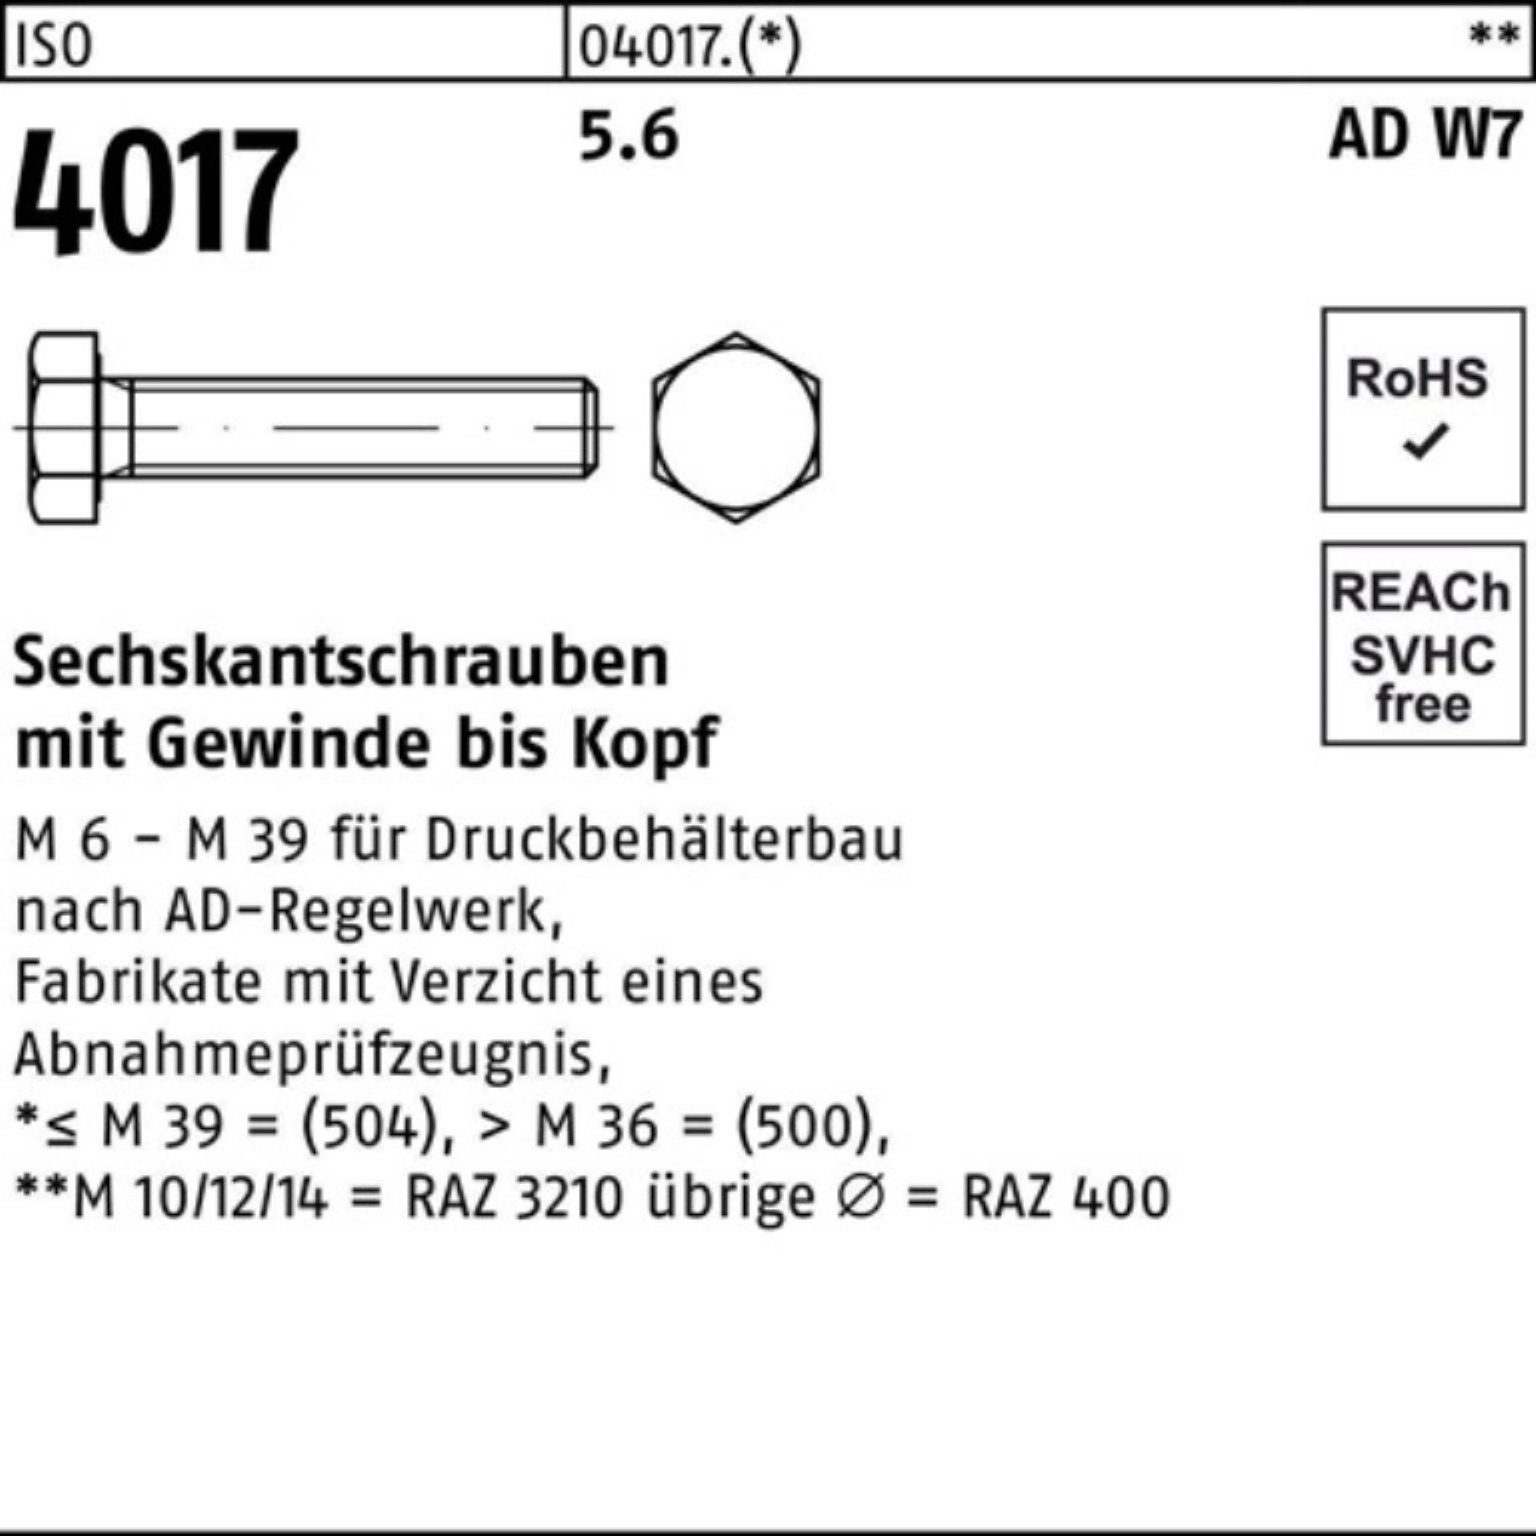 Bufab Sechskantschraube 100er Pack Sechskantschraube ISO 4017 VG M16x 30 5.6 AD W7 50 Stück I